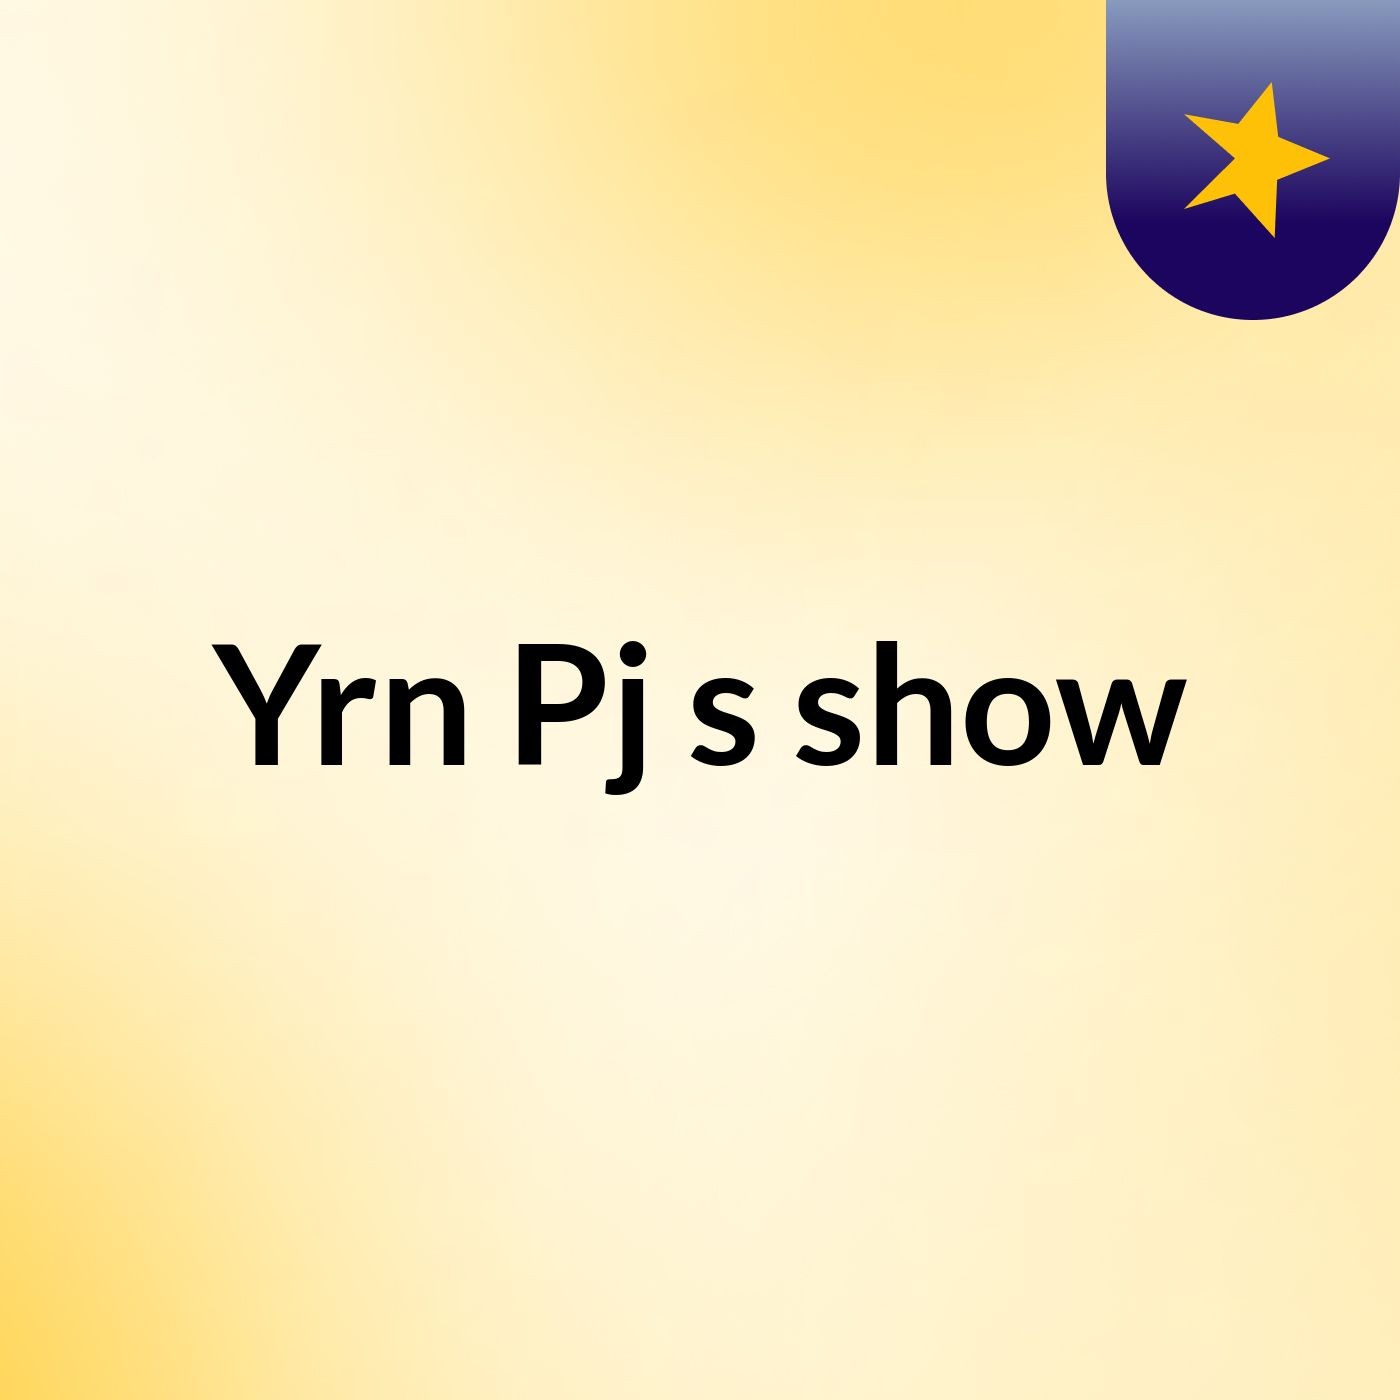 Yrn Pj's show